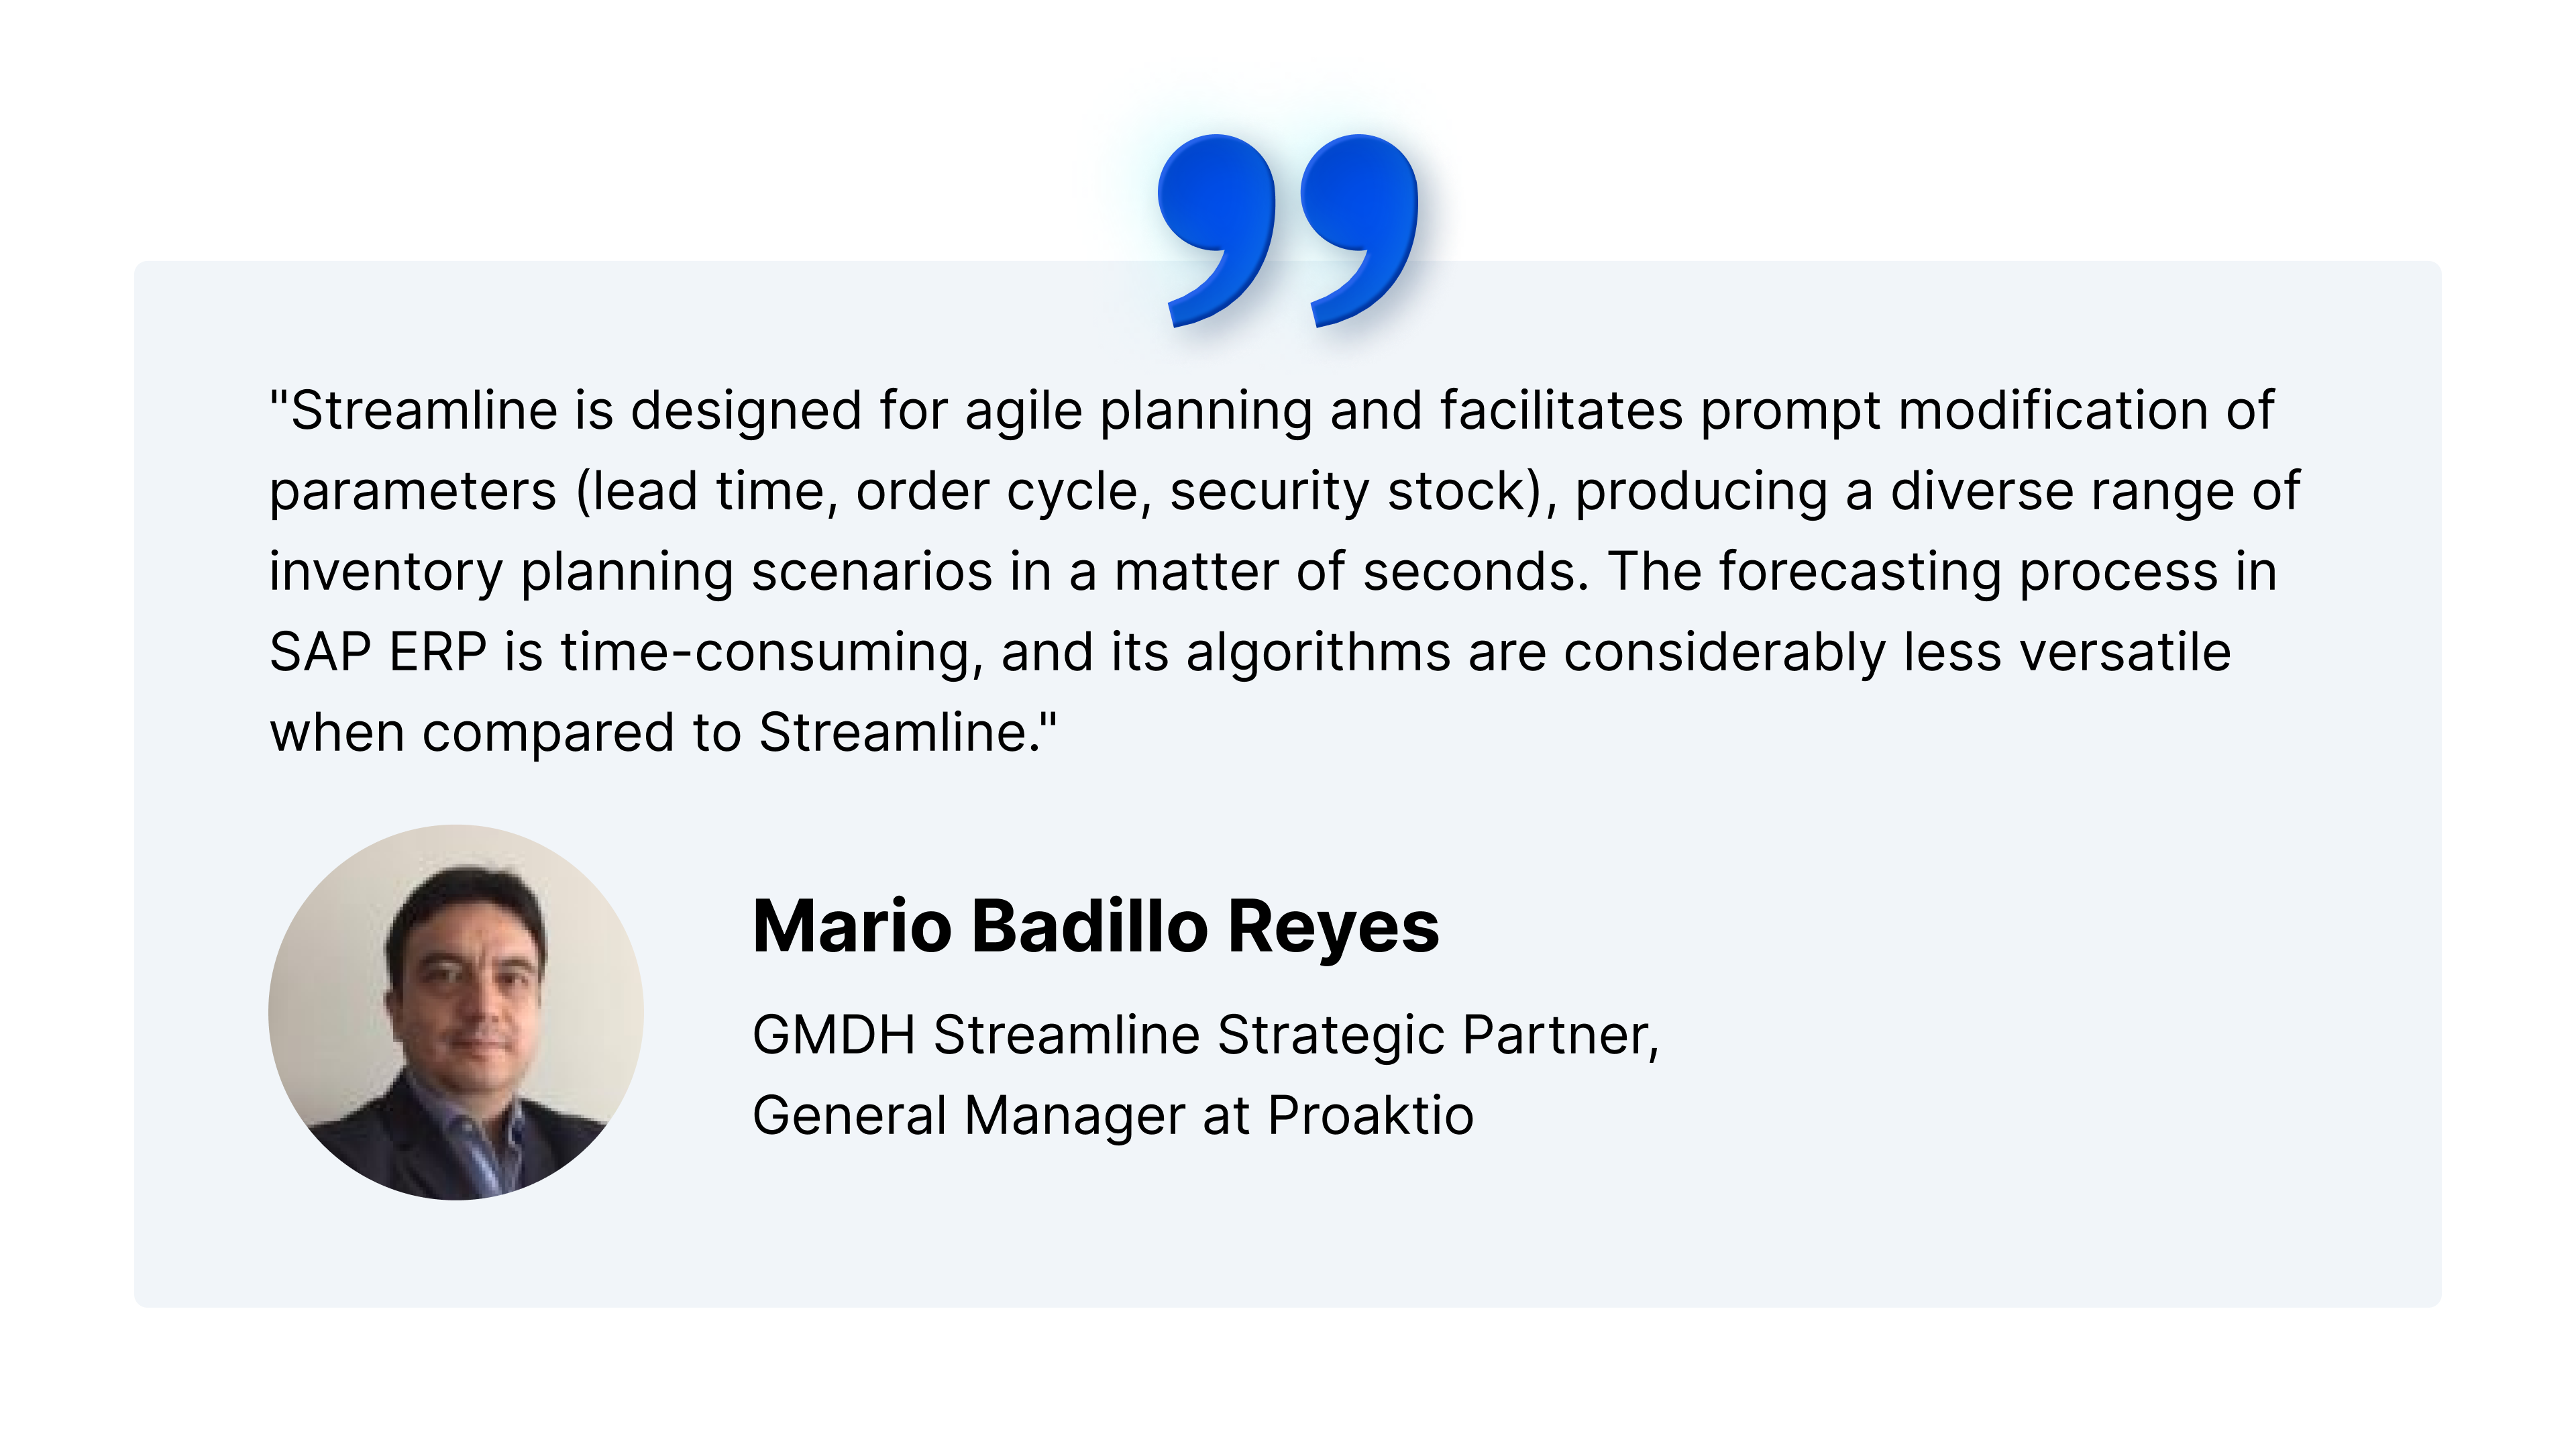 Depoimento de Mario Badillo sobre os benefícios de usar SAP ERP e Streamline juntos